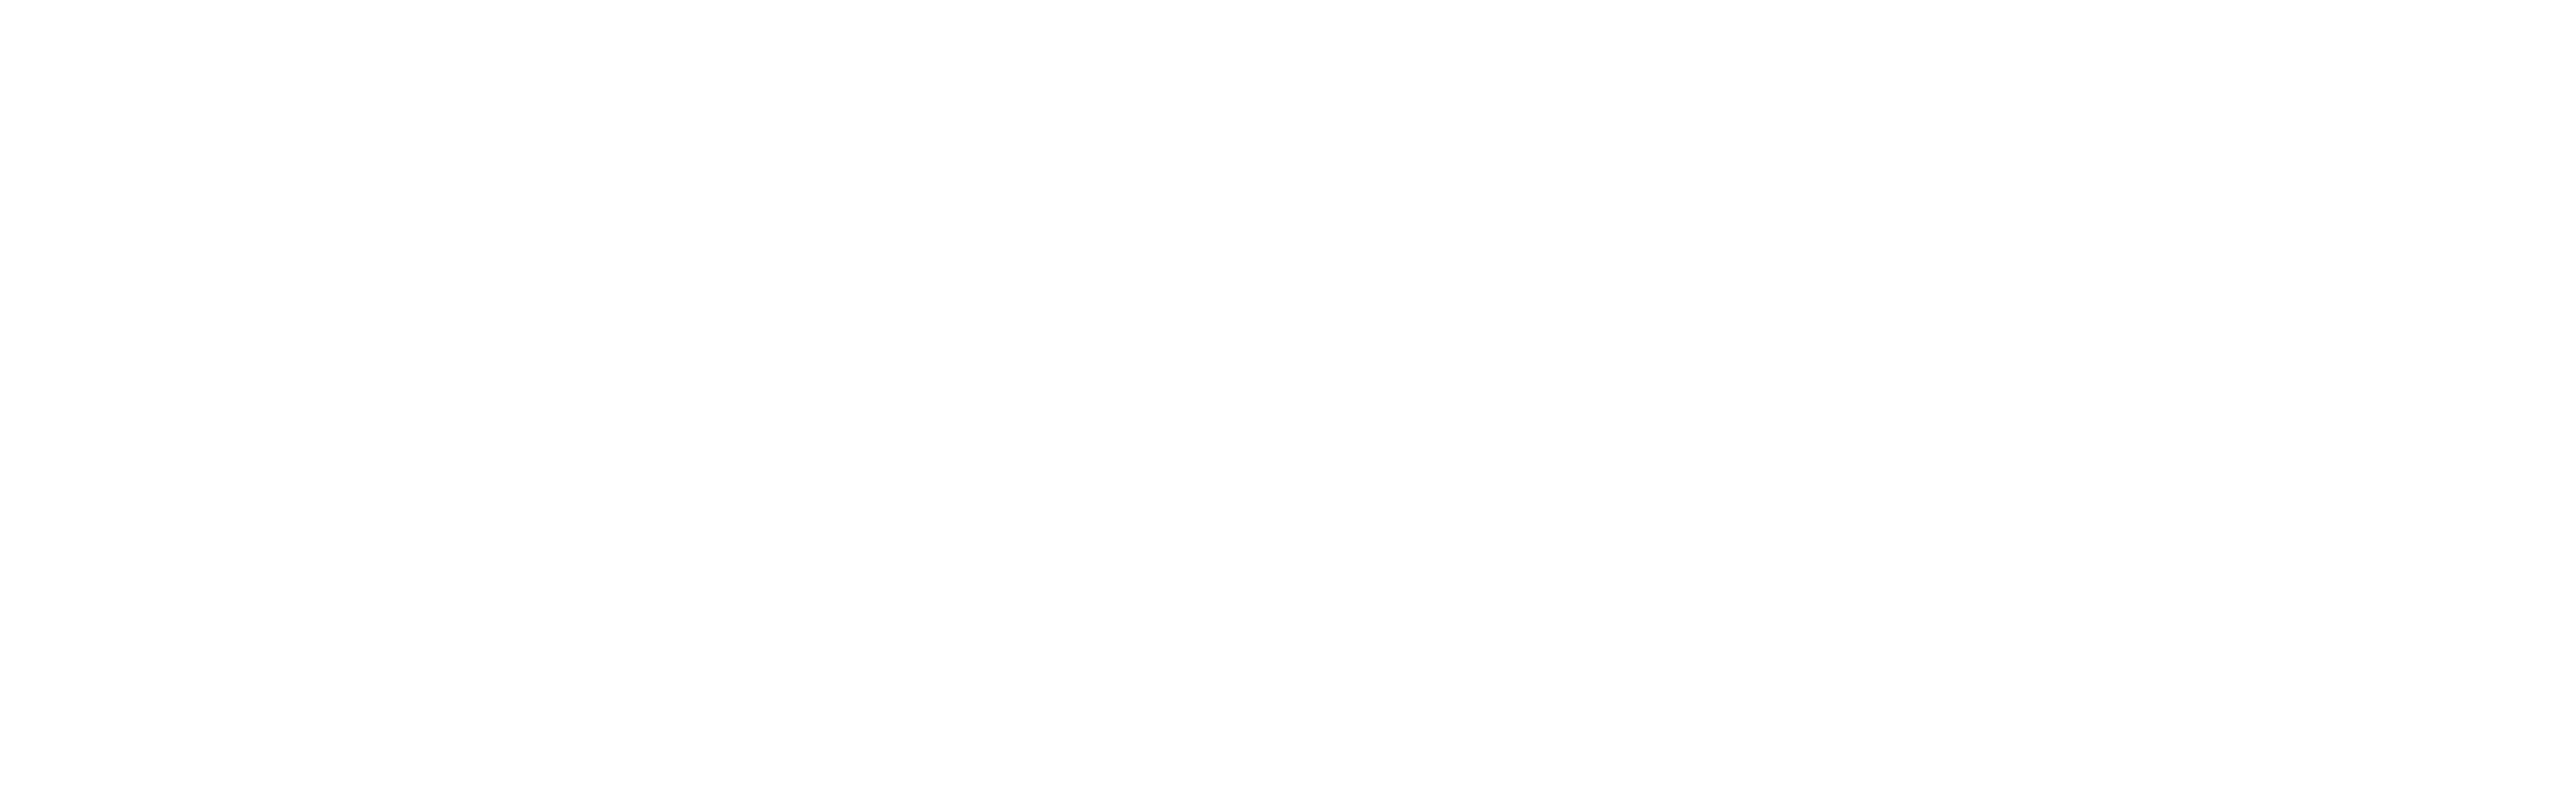 Trucksmart Insurance